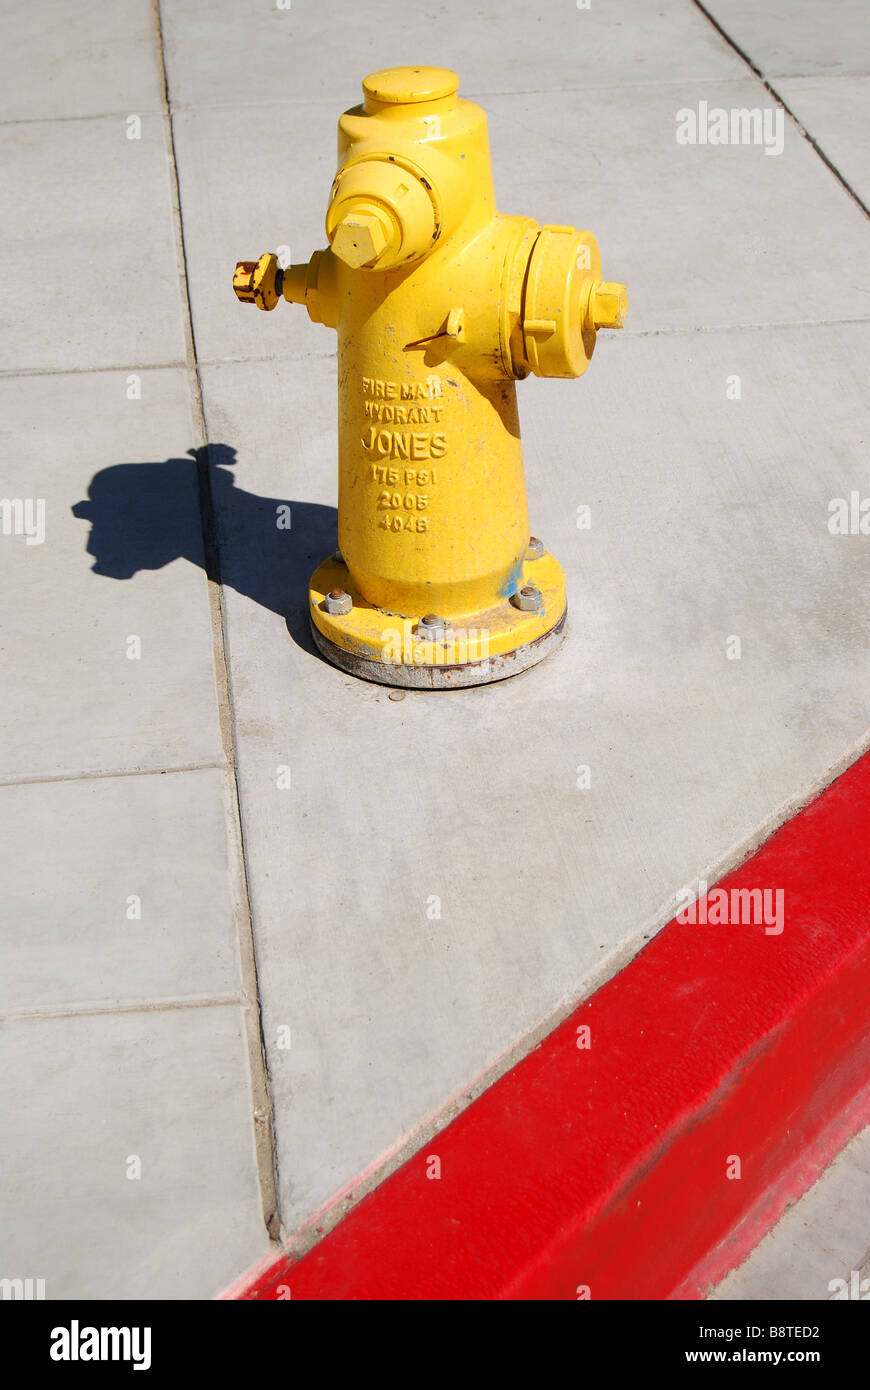 Fire hydrant on sidewalk, Los Angeles, California, United States of America Stock Photo